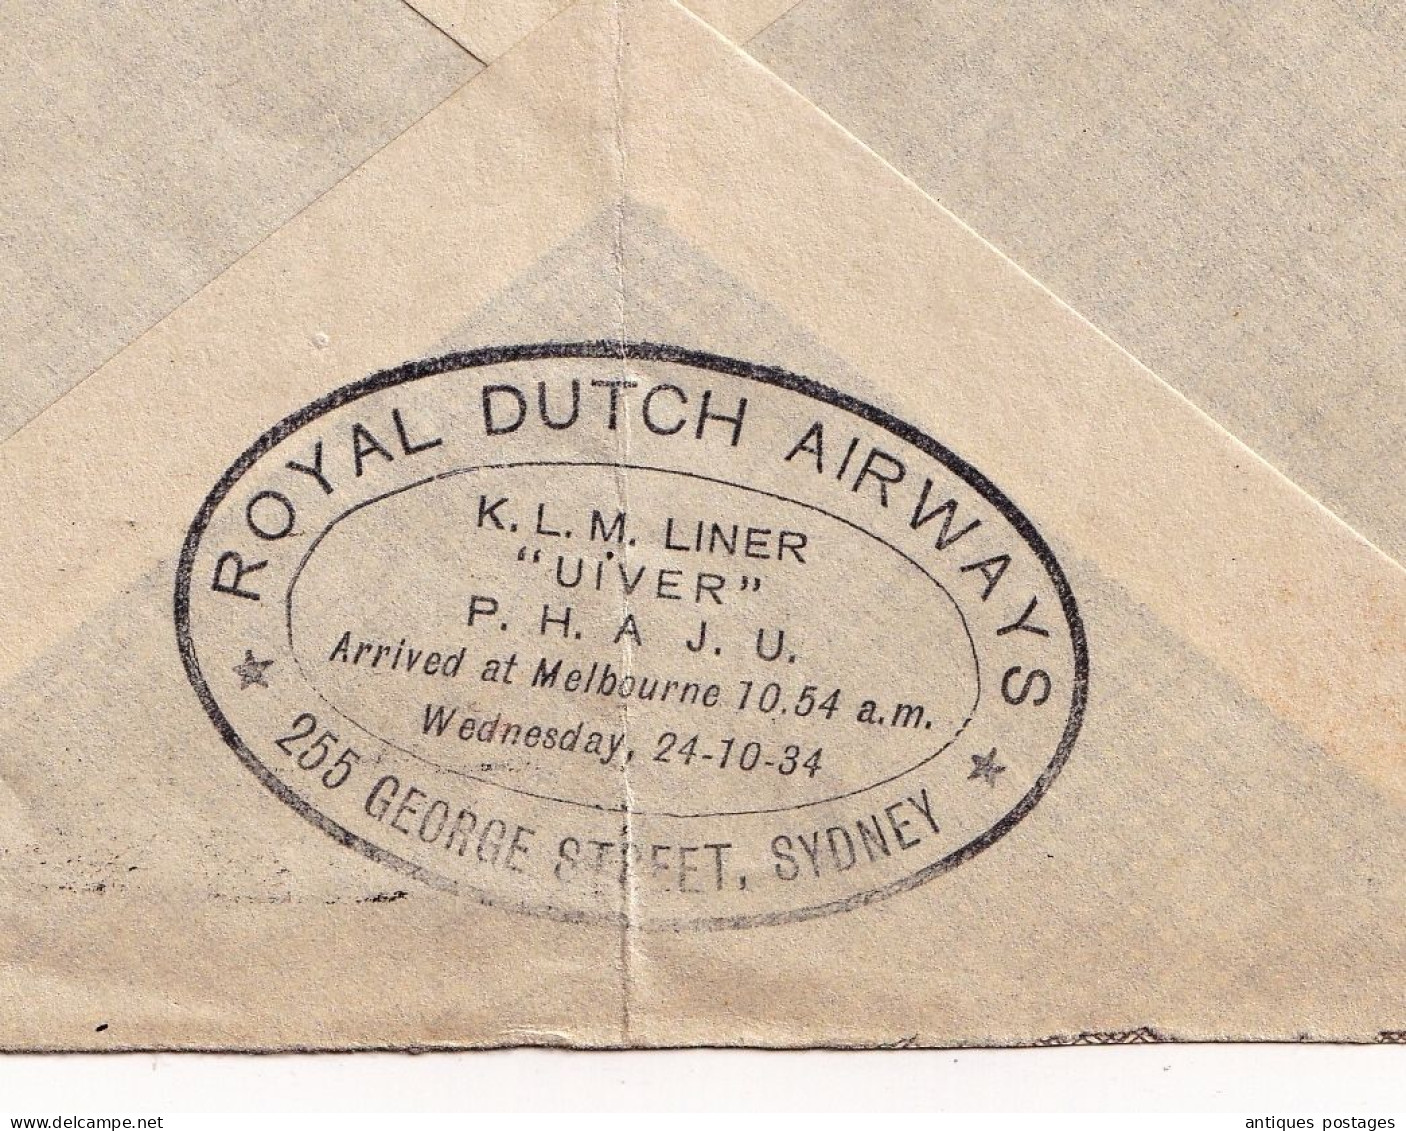 Sydney 1934 Australie Australia Royal Dutch Air Lines Airways Amsterdam Holland K.L.M. Liner " Uiver " P.H.A.J.U. - Briefe U. Dokumente